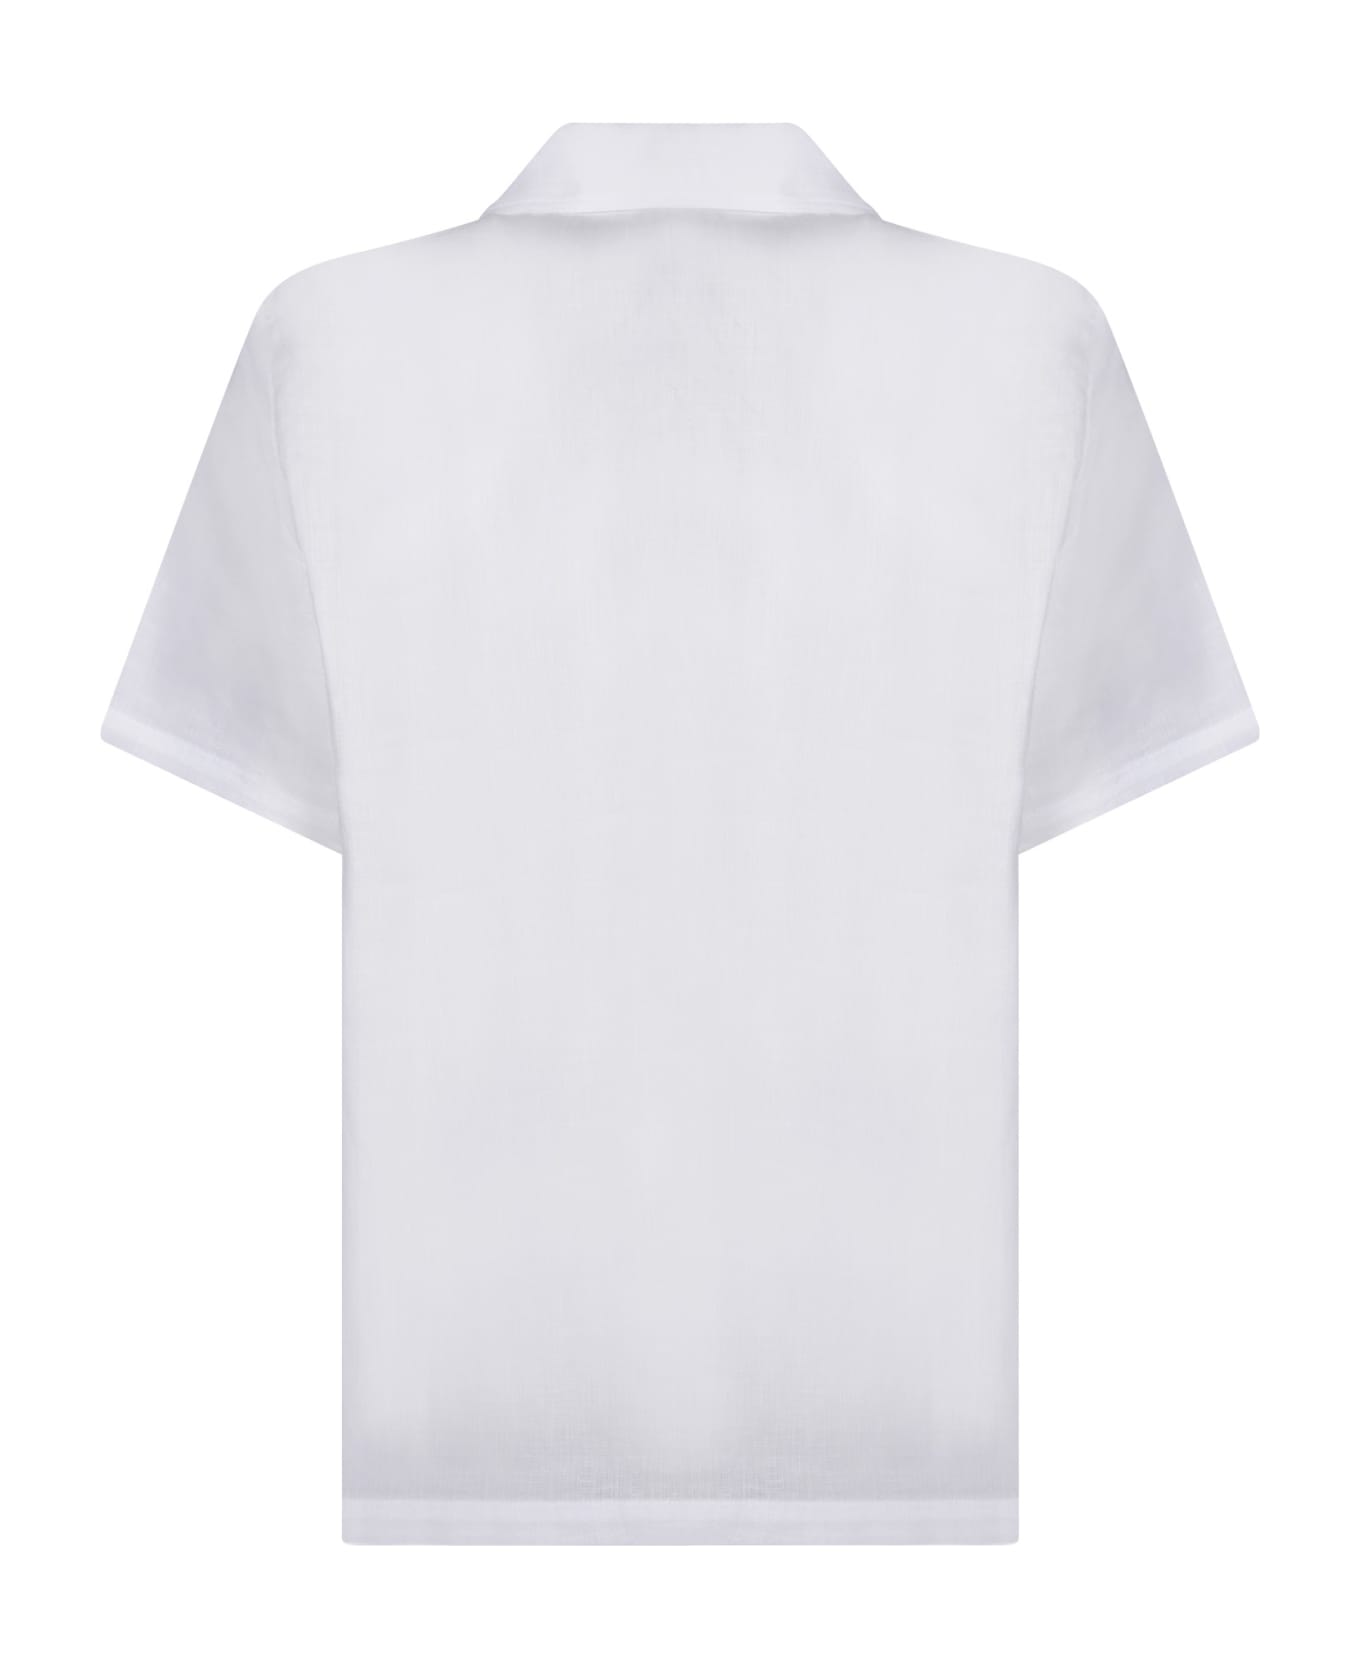 Séfr Dalian' White Shirt Sã©fr - White